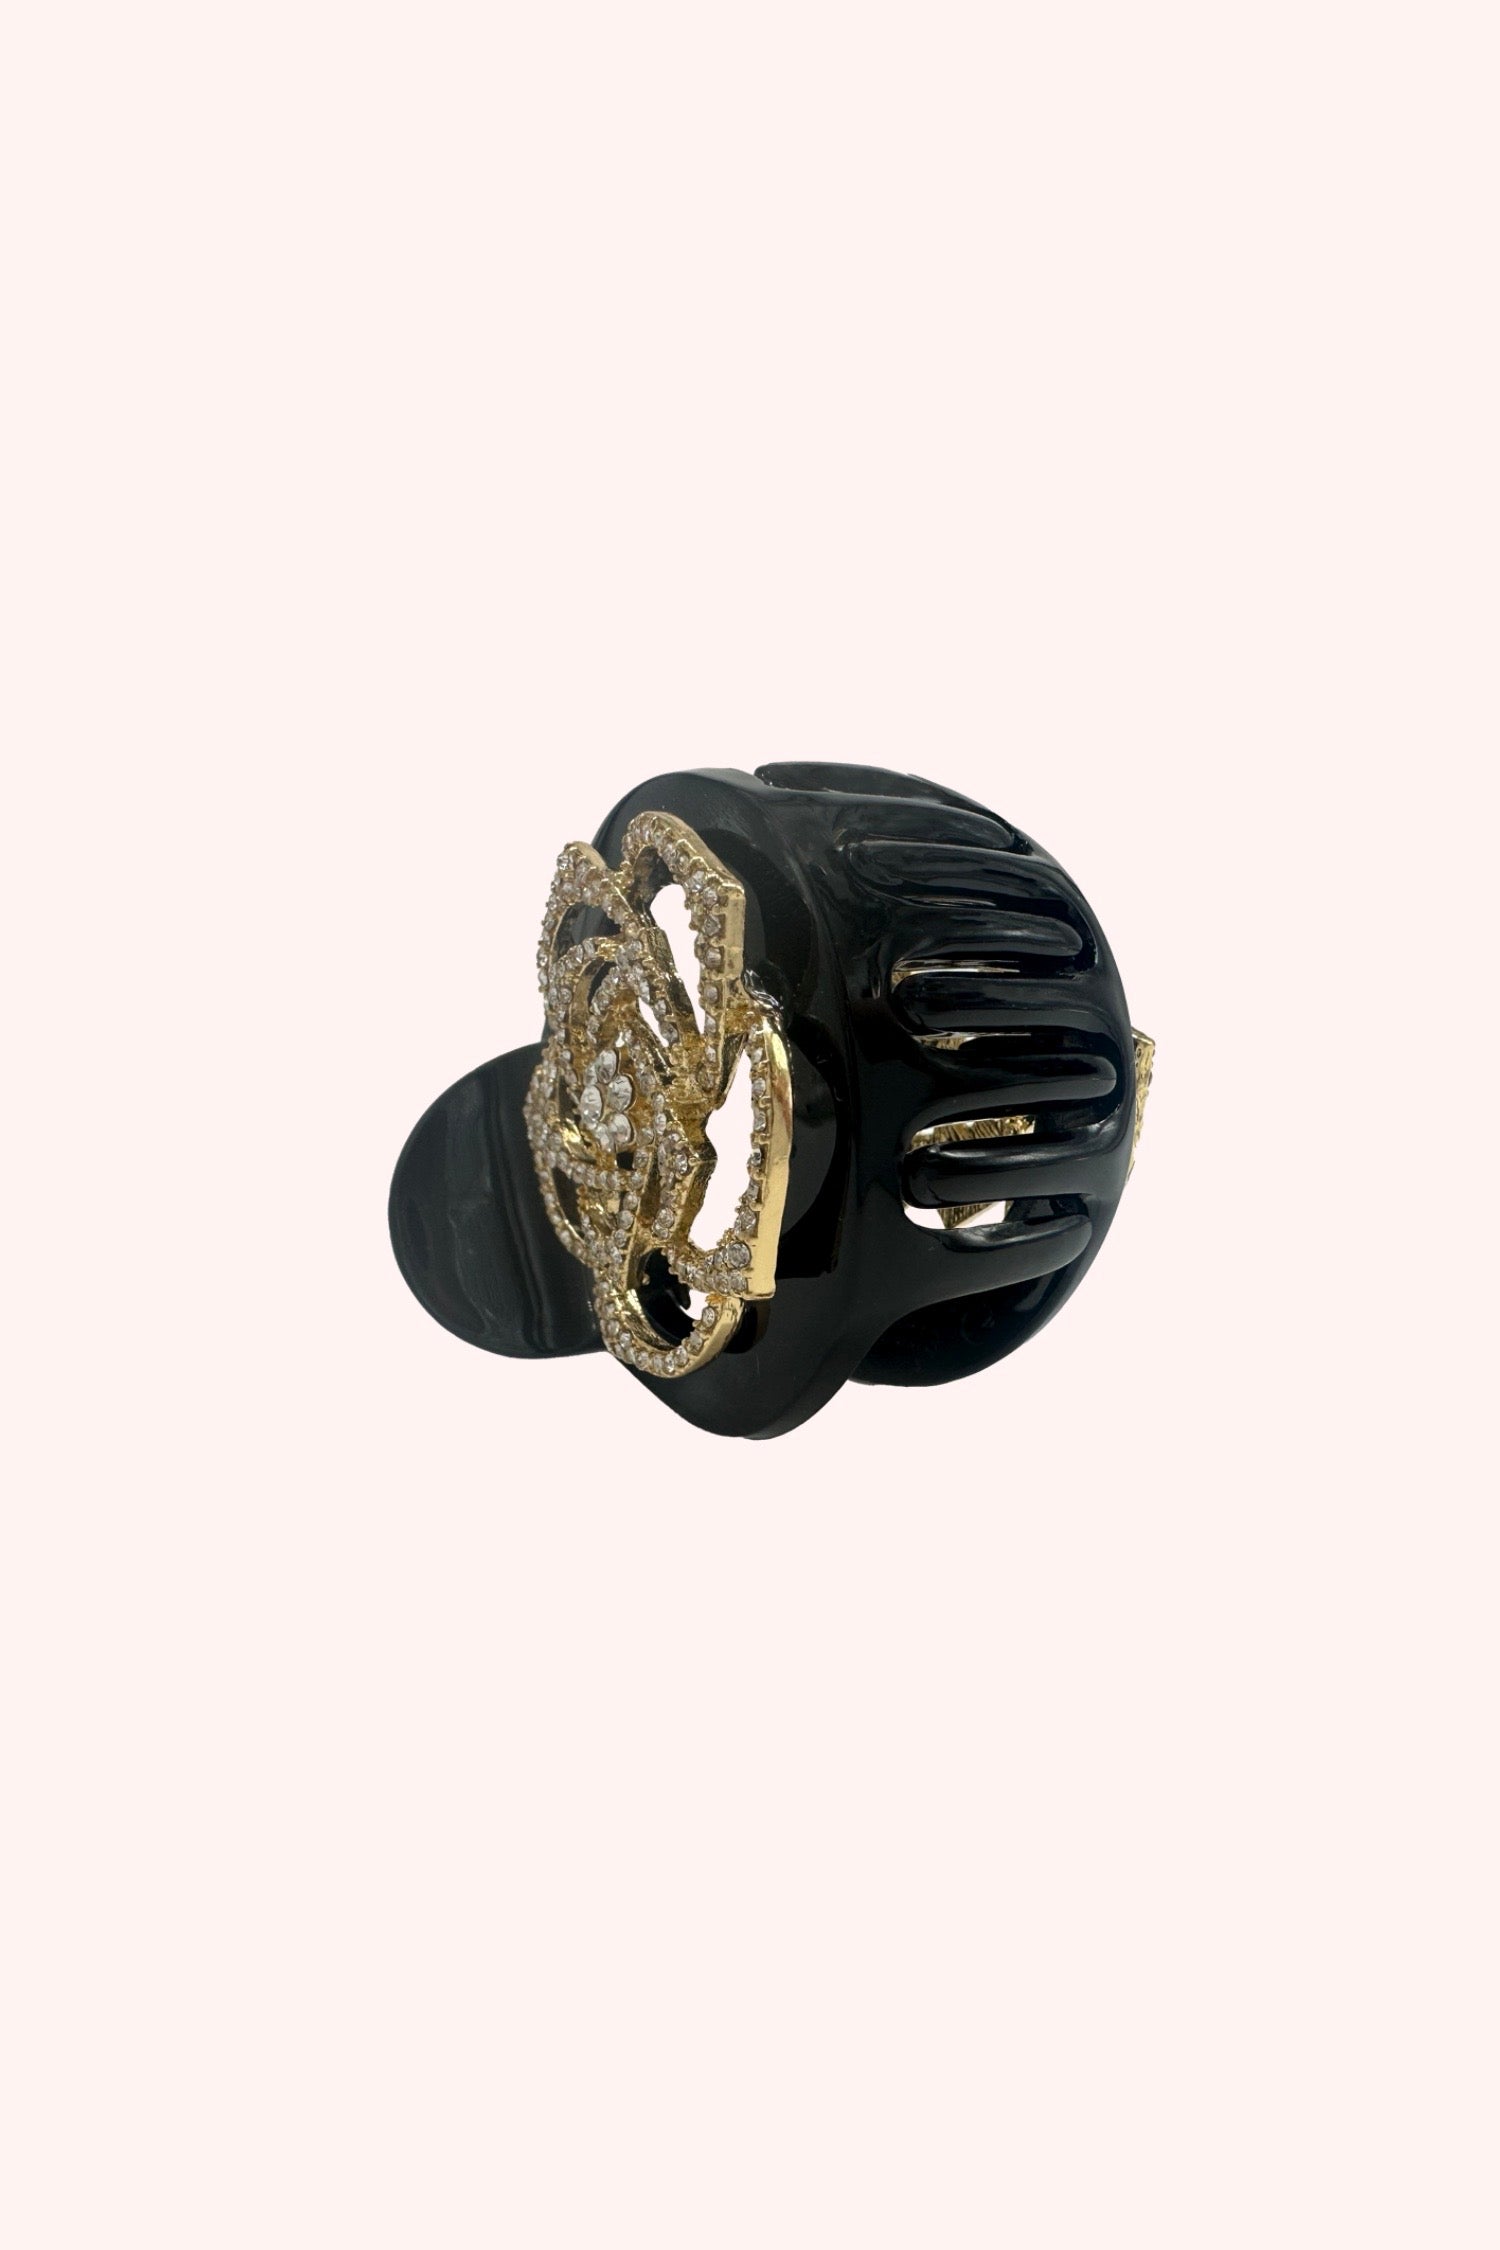 Stylized Gemstone Rose with Claw Clip Black